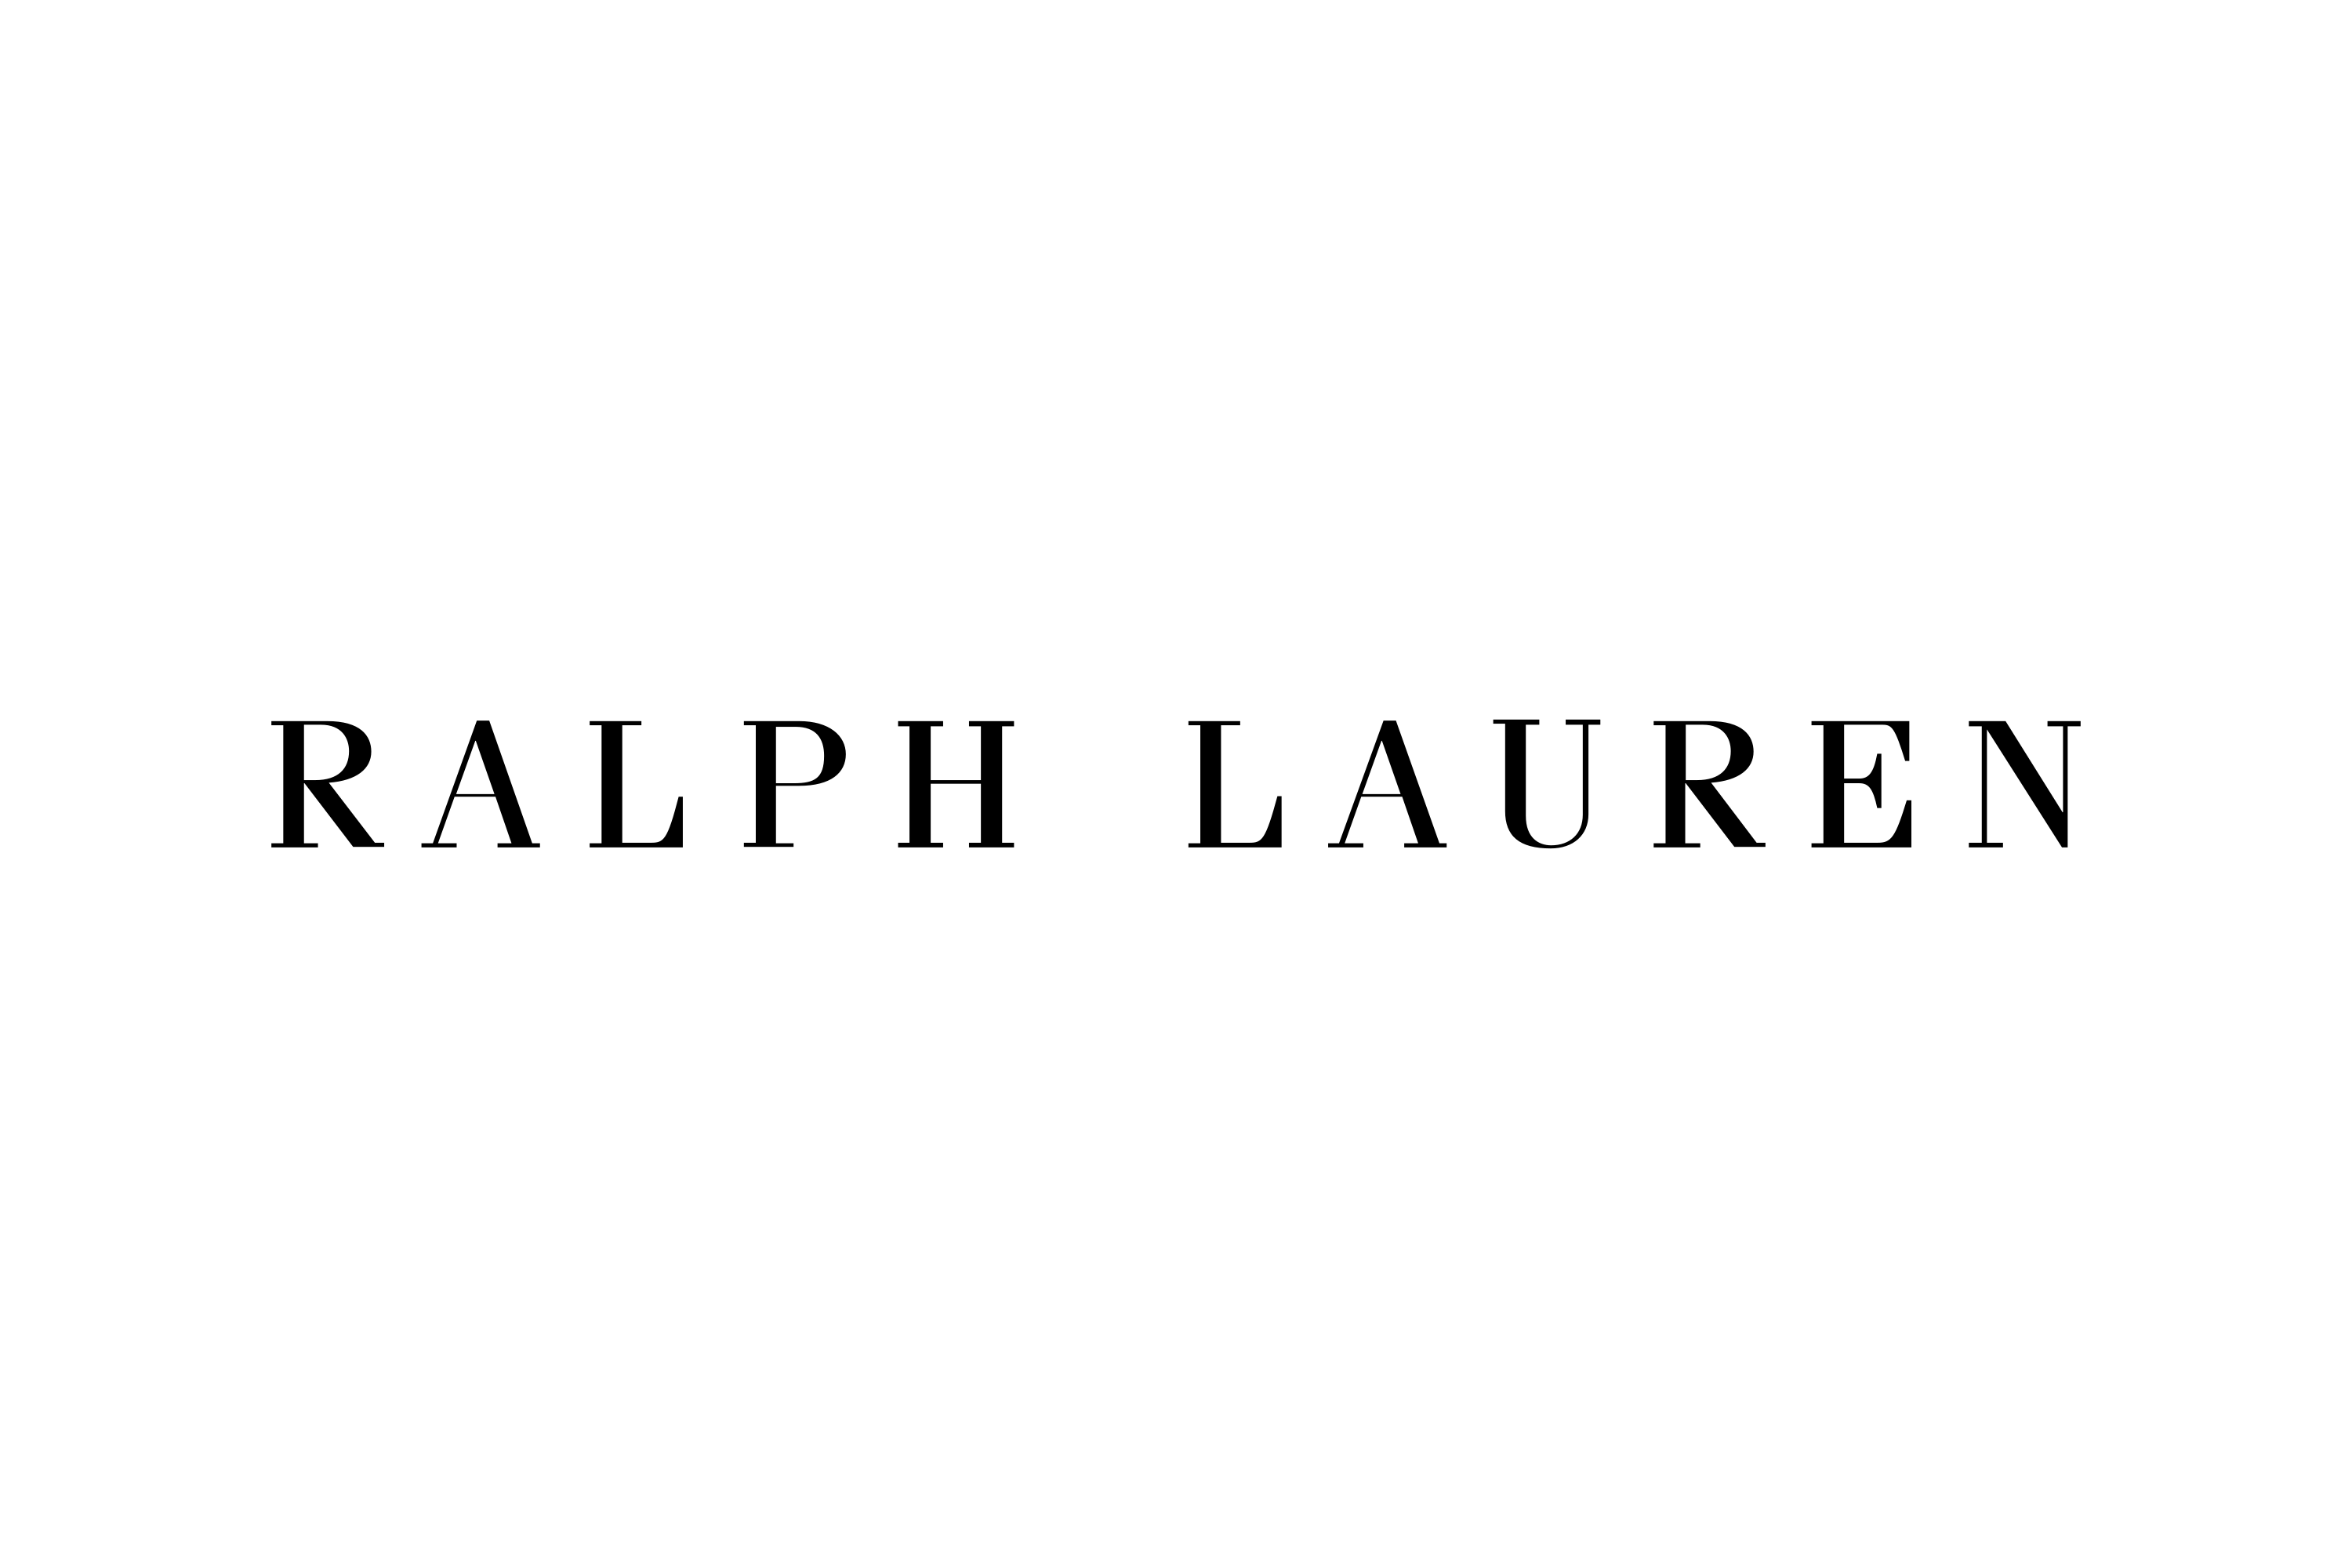 Download Ralph Lauren Corporation Logo in SVG Vector or PNG File Format